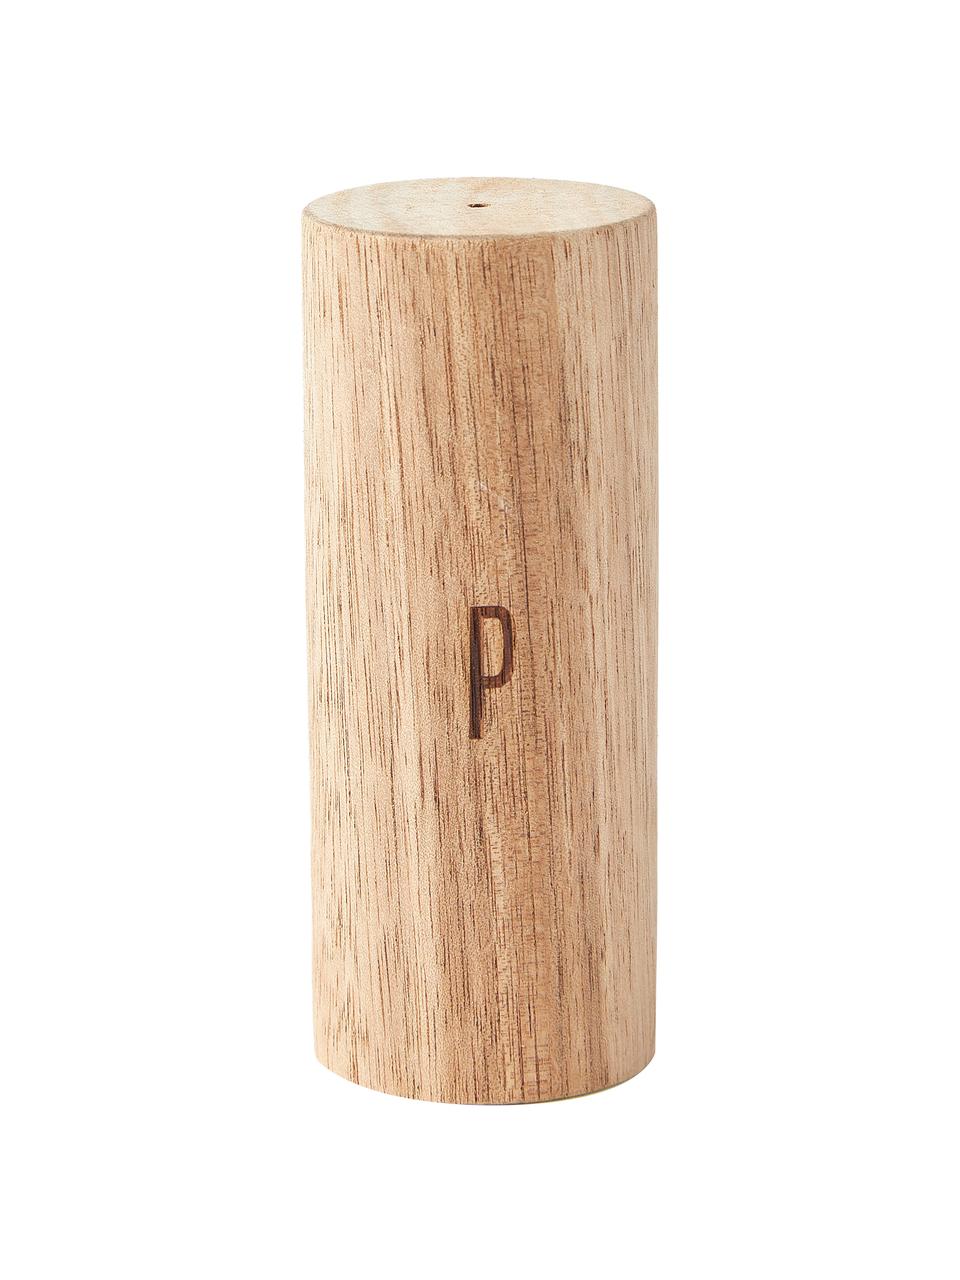 Zout- en peperstrooier Wooden, set van 2, Hout, Licht hout, Ø 4 x H 10 cm